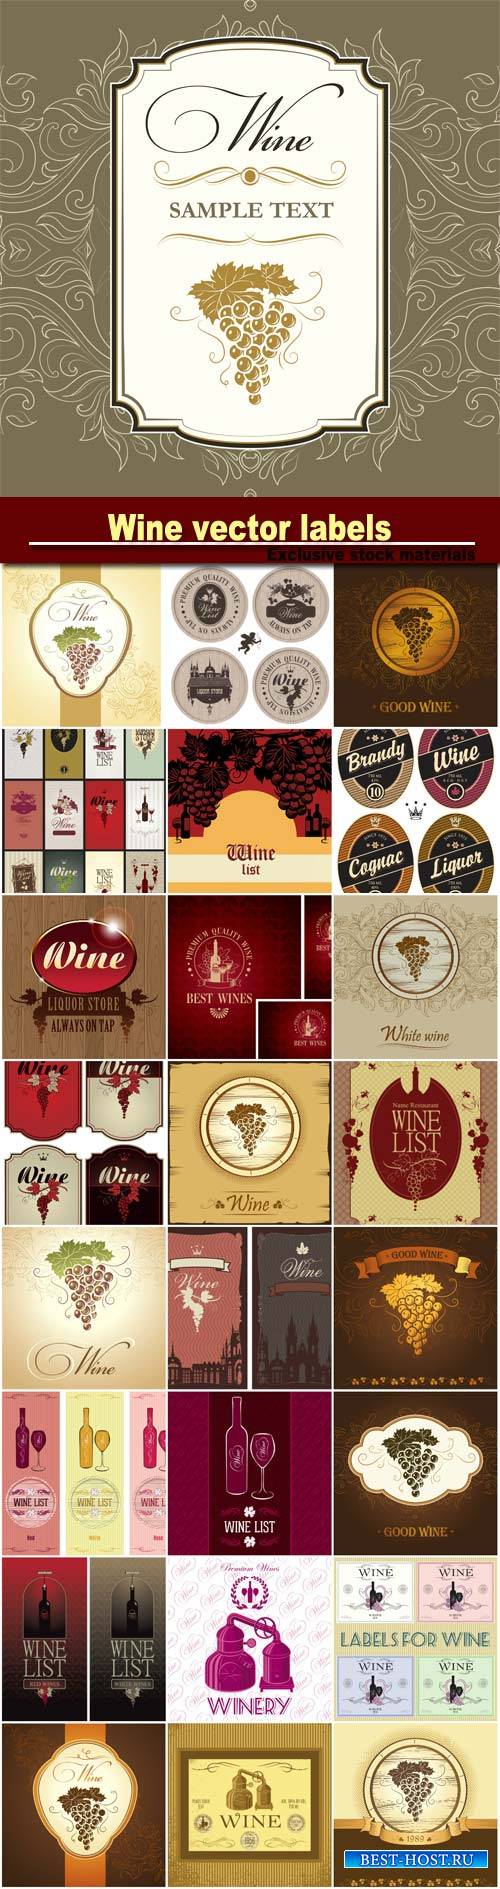 Wine vector labels, menu